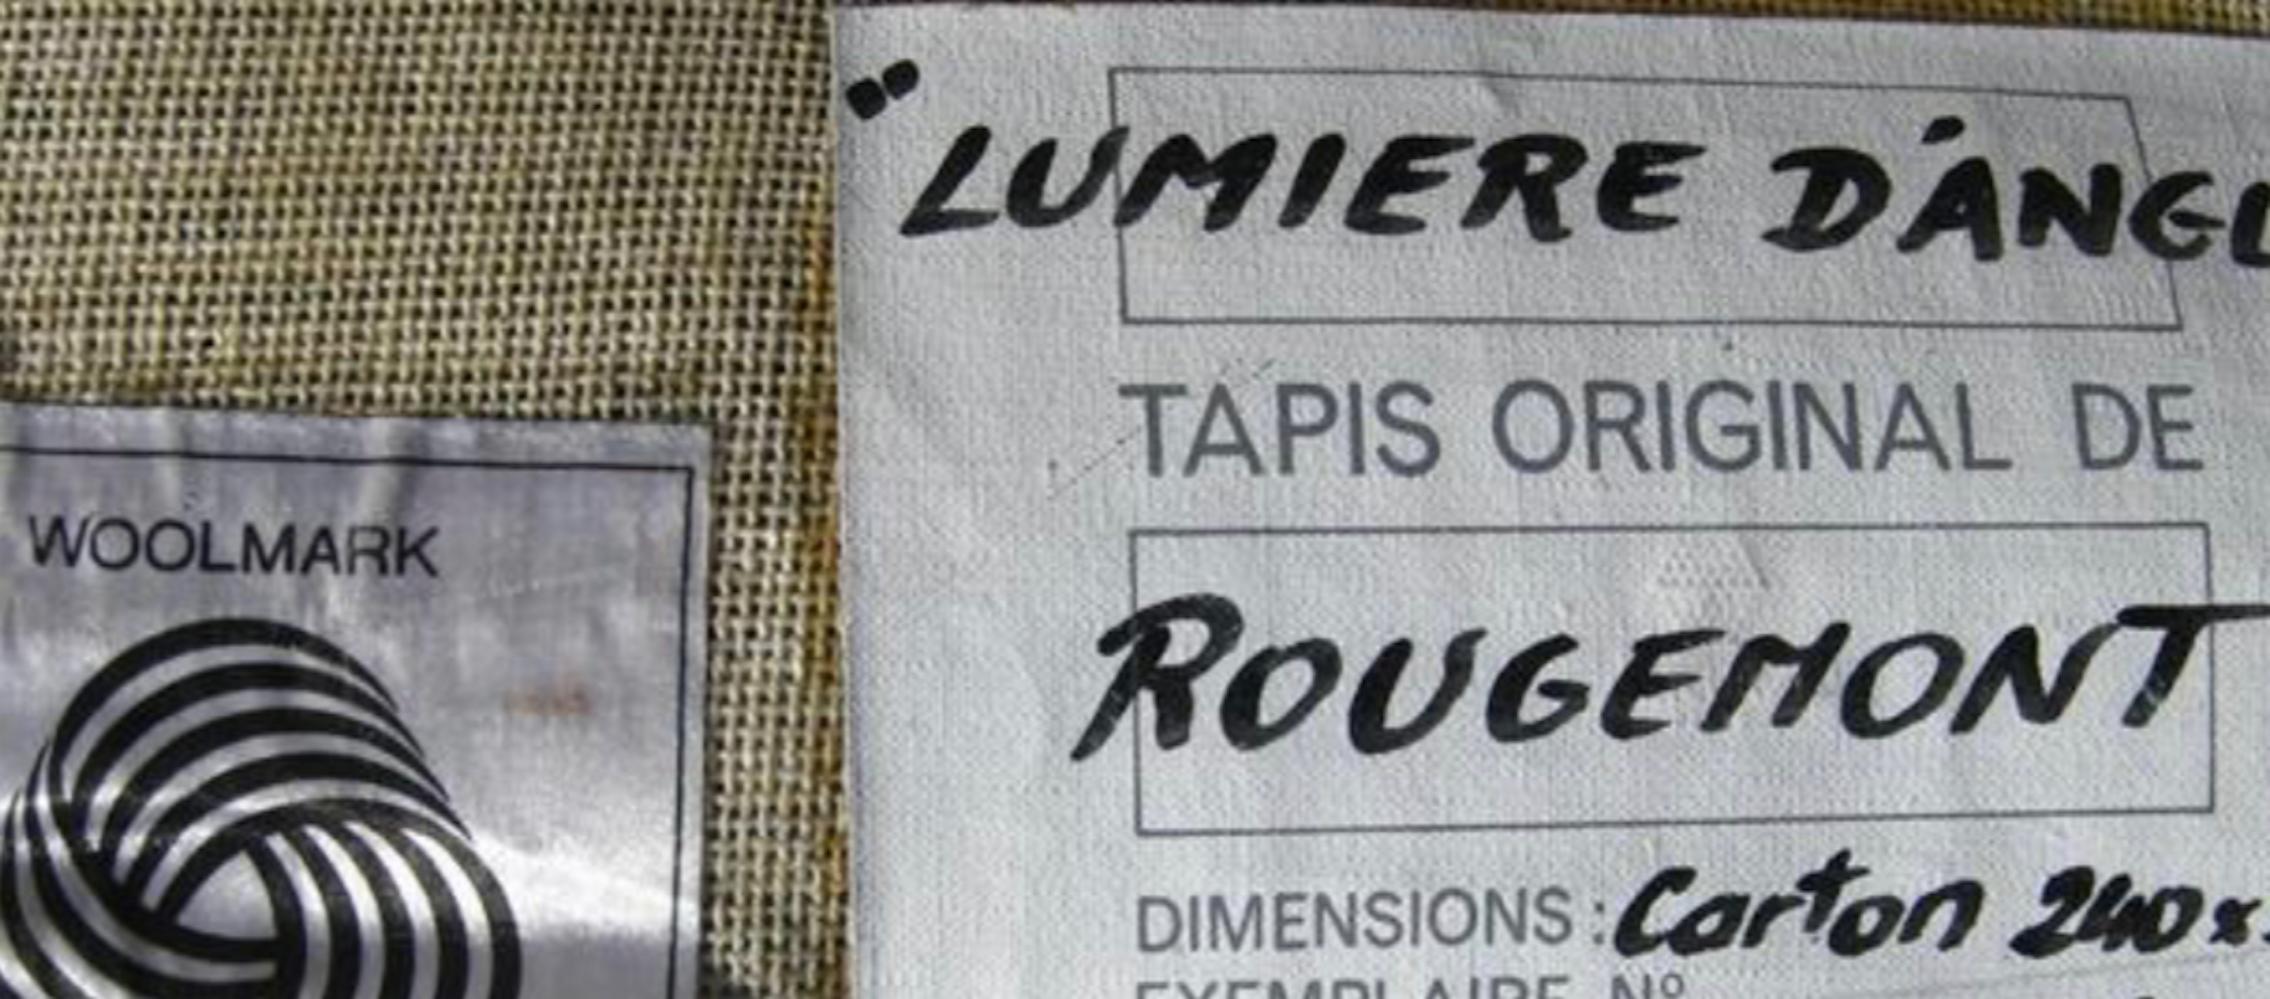 Guy de Rougemont, Lumiere d'angle Thick Pile Teppich 53, Artcurial, Frankreich, 1989 (Französisch) im Angebot